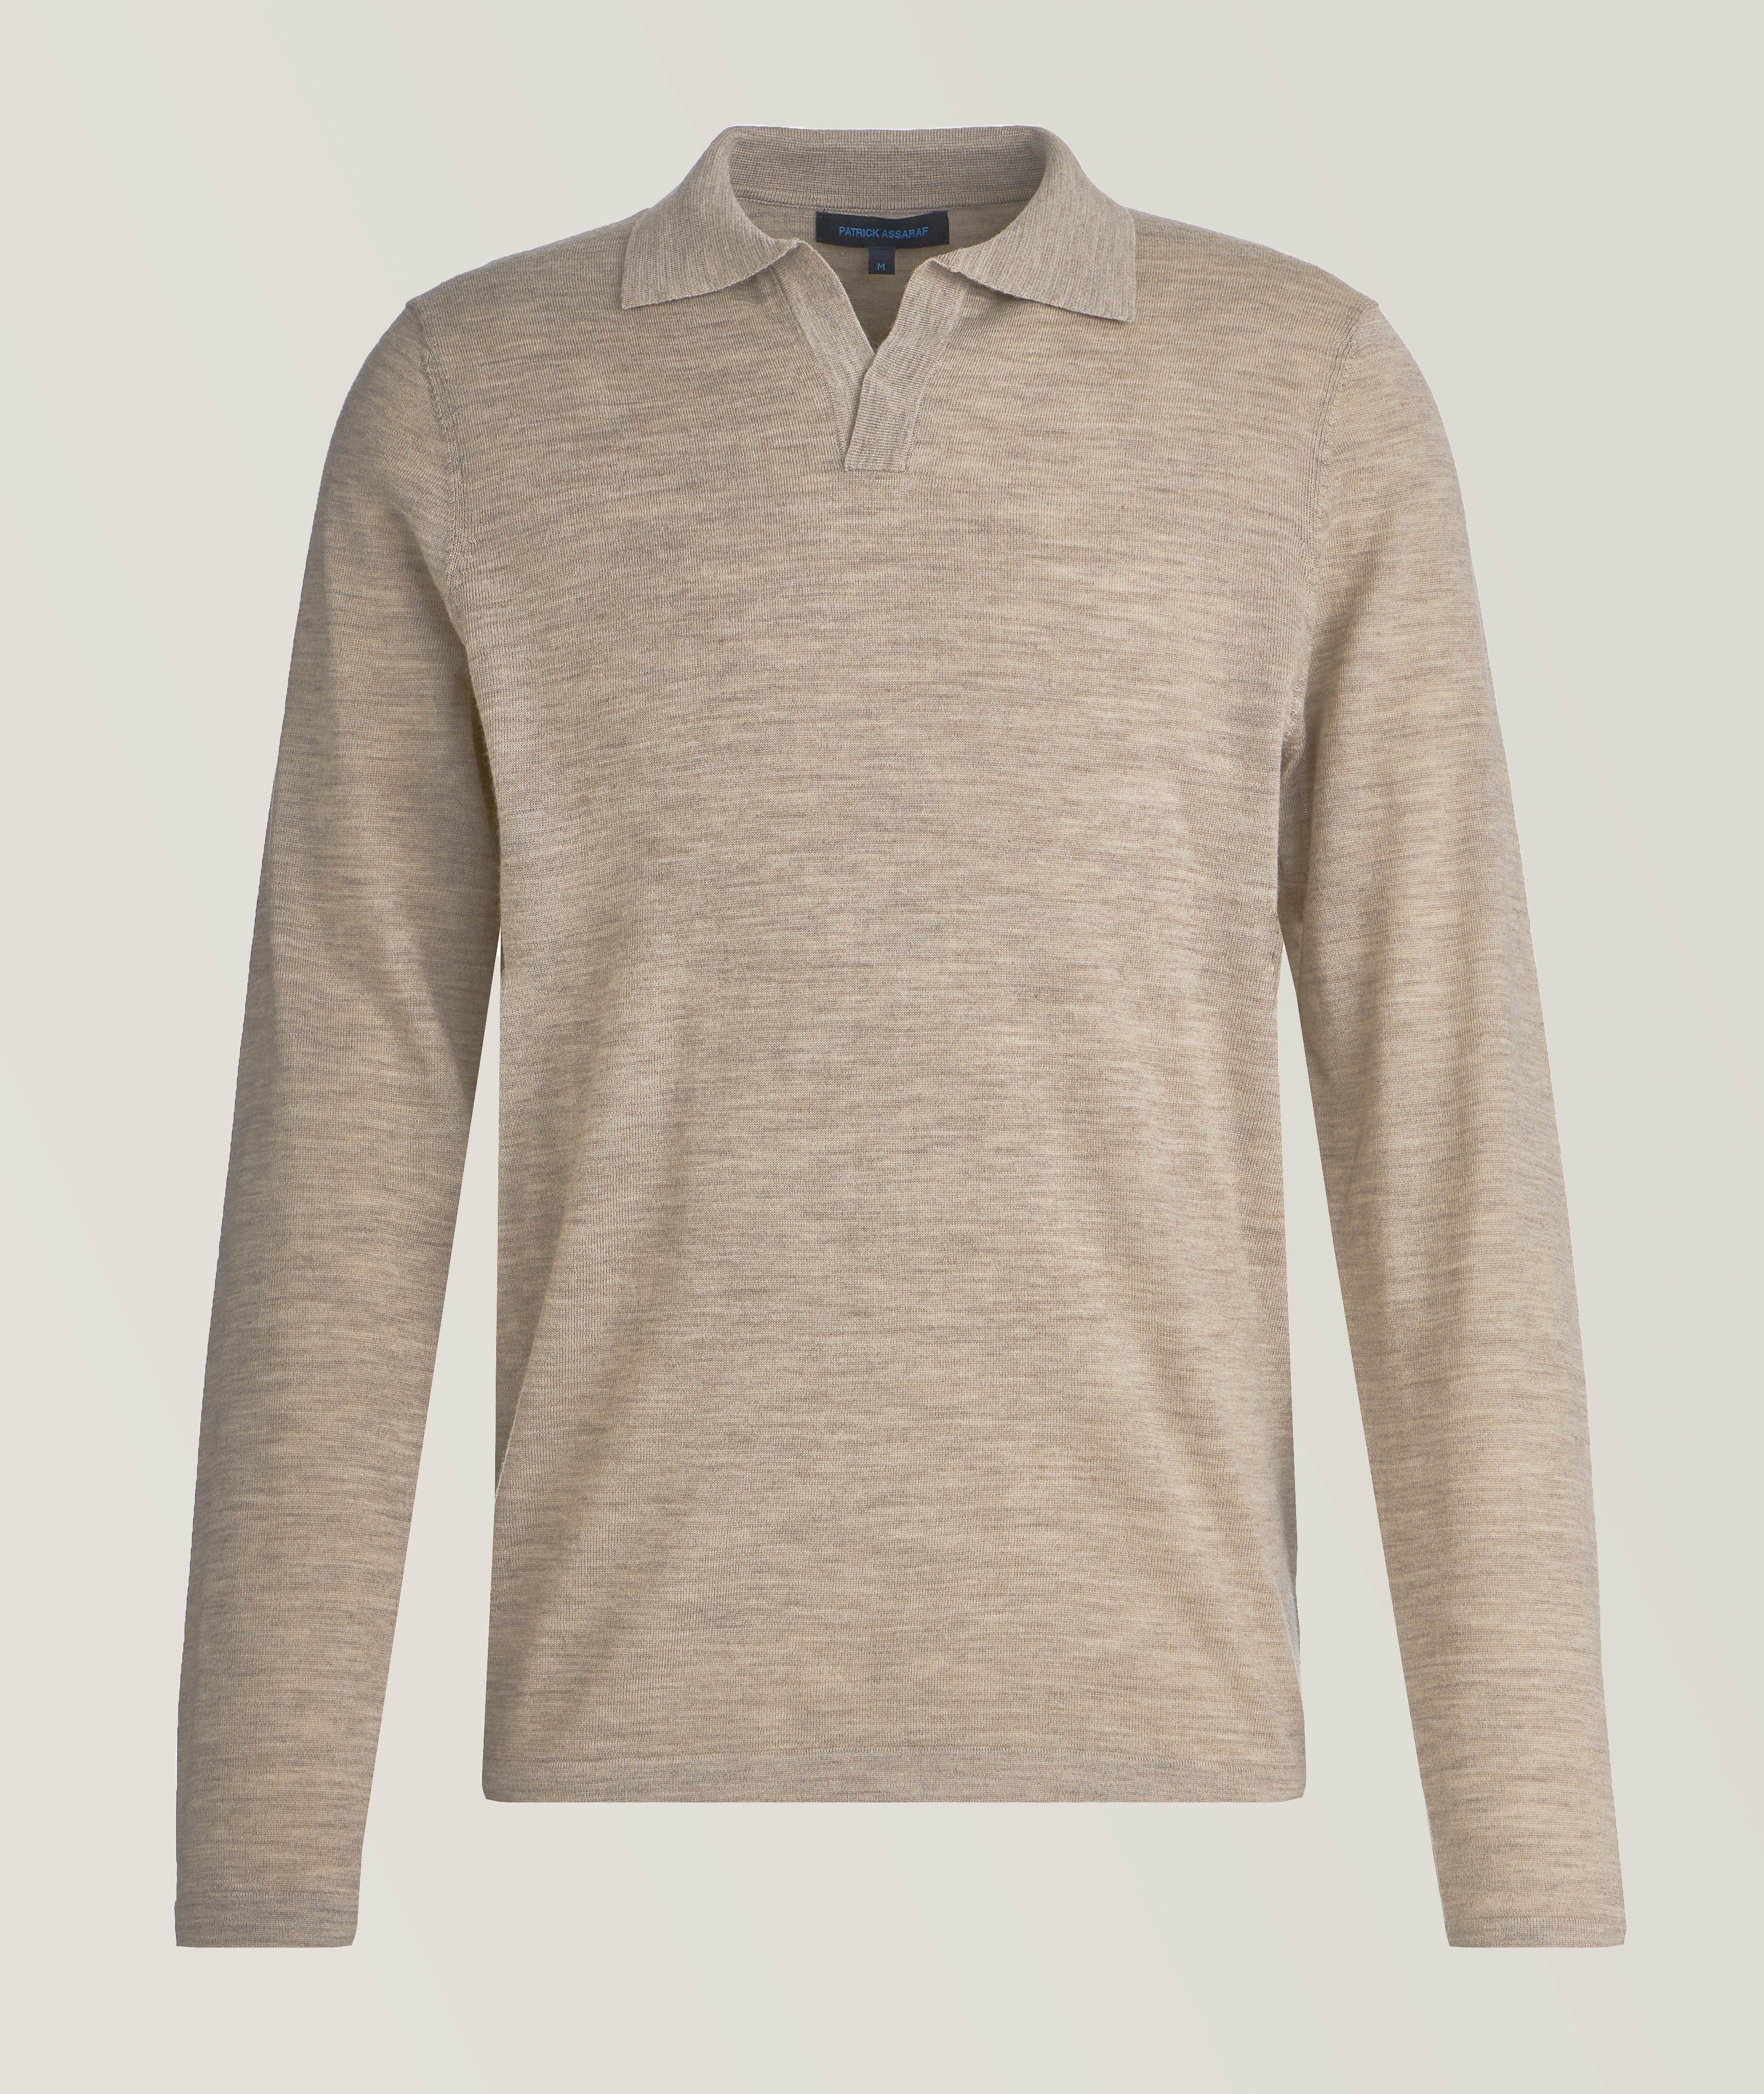 Patrick Assaraf Long-Sleeve Mélange Merino Wool Polo | Sweaters & Knits ...